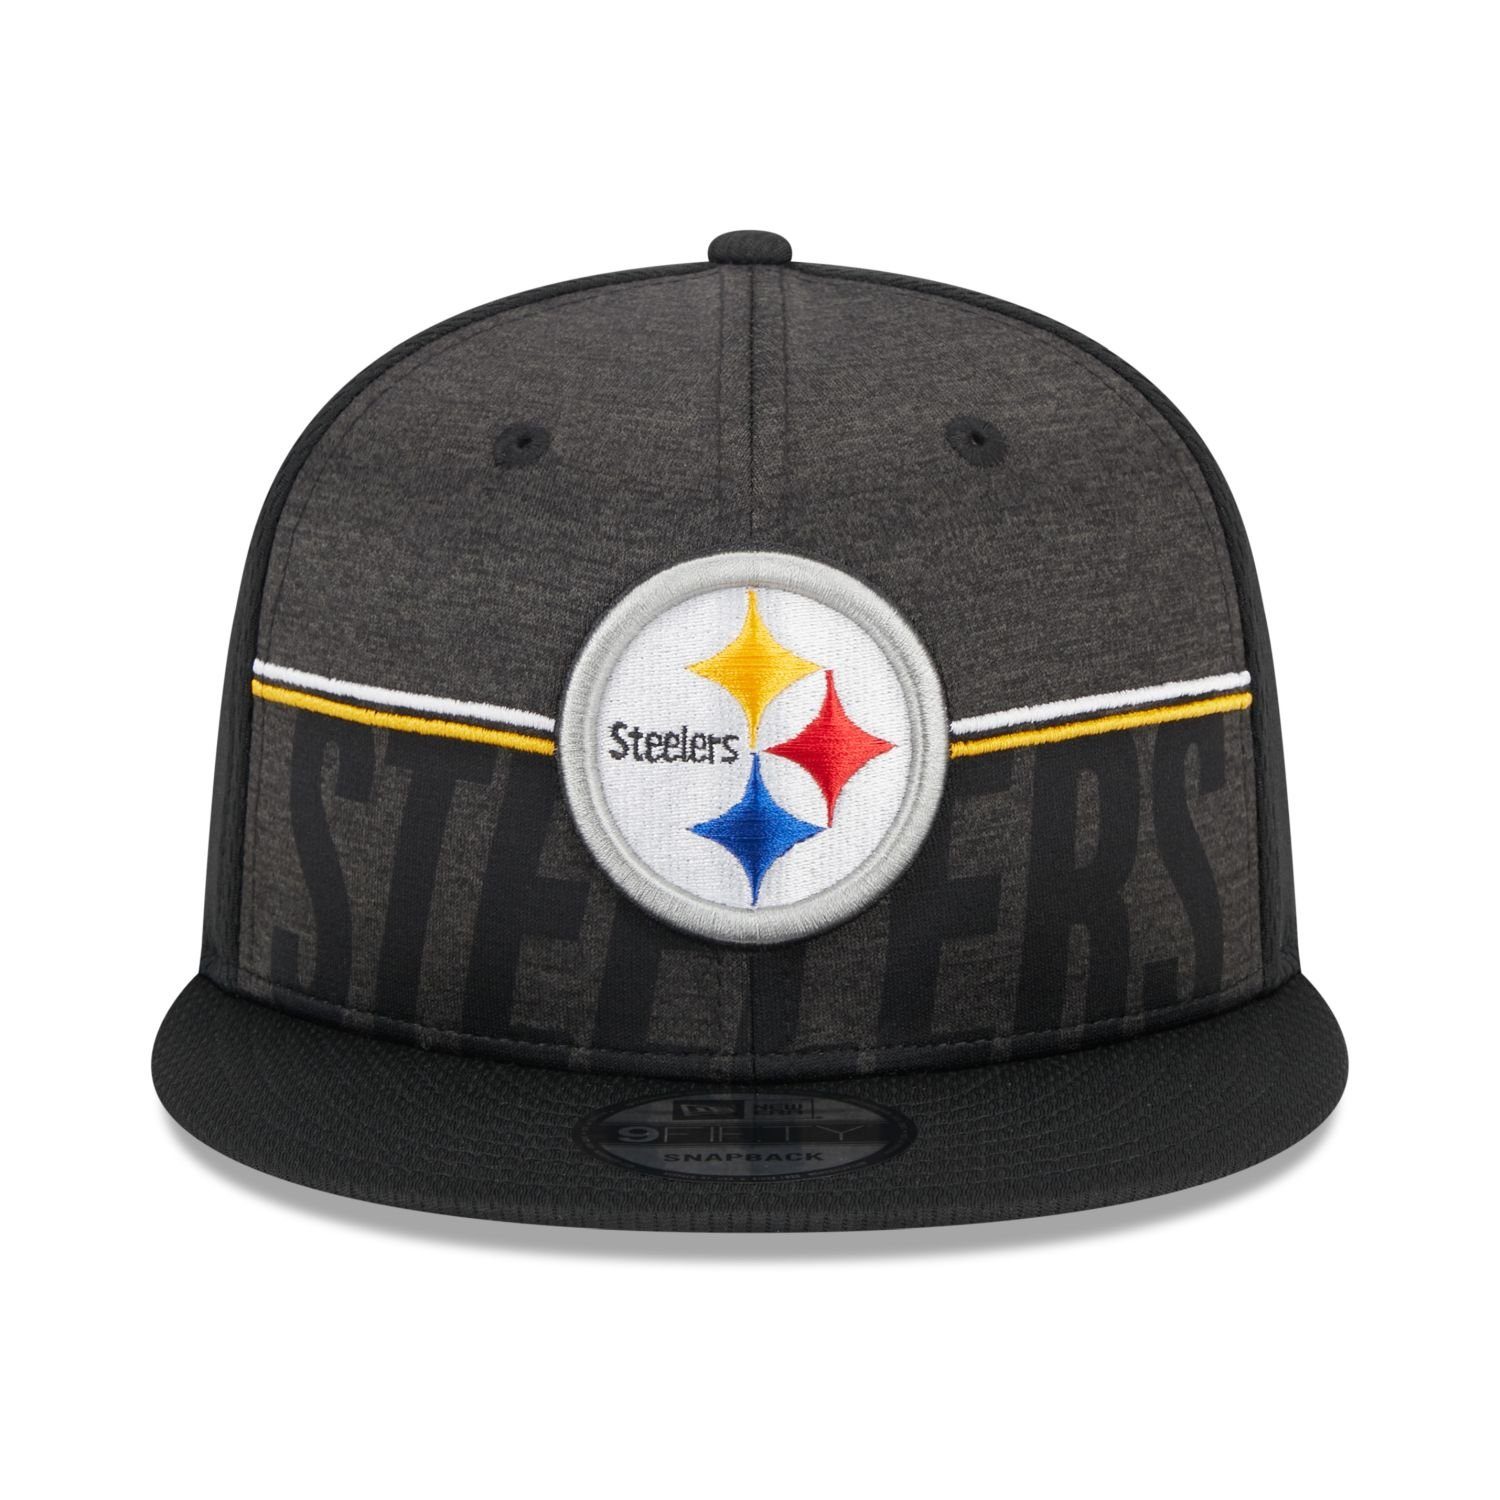 New Era Snapback Cap Steelers TRAINING 9FIFTY Pittsburgh